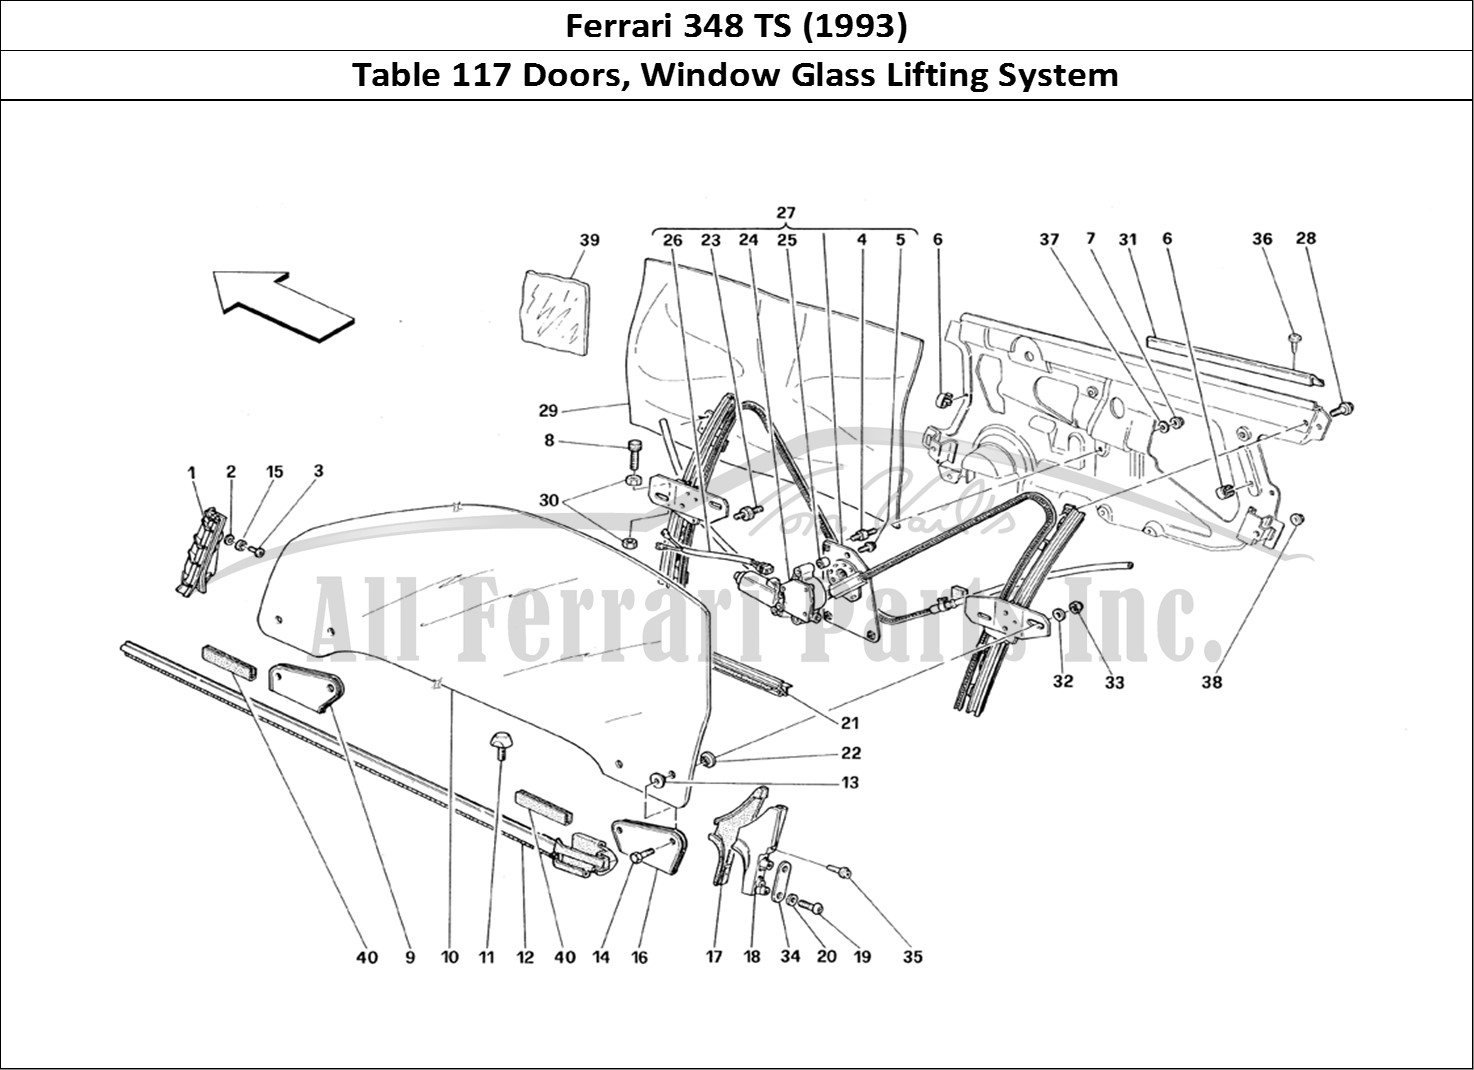 Ferrari Parts Ferrari 348 TB (1993) Page 117 Doors - Glass Lifting Dev